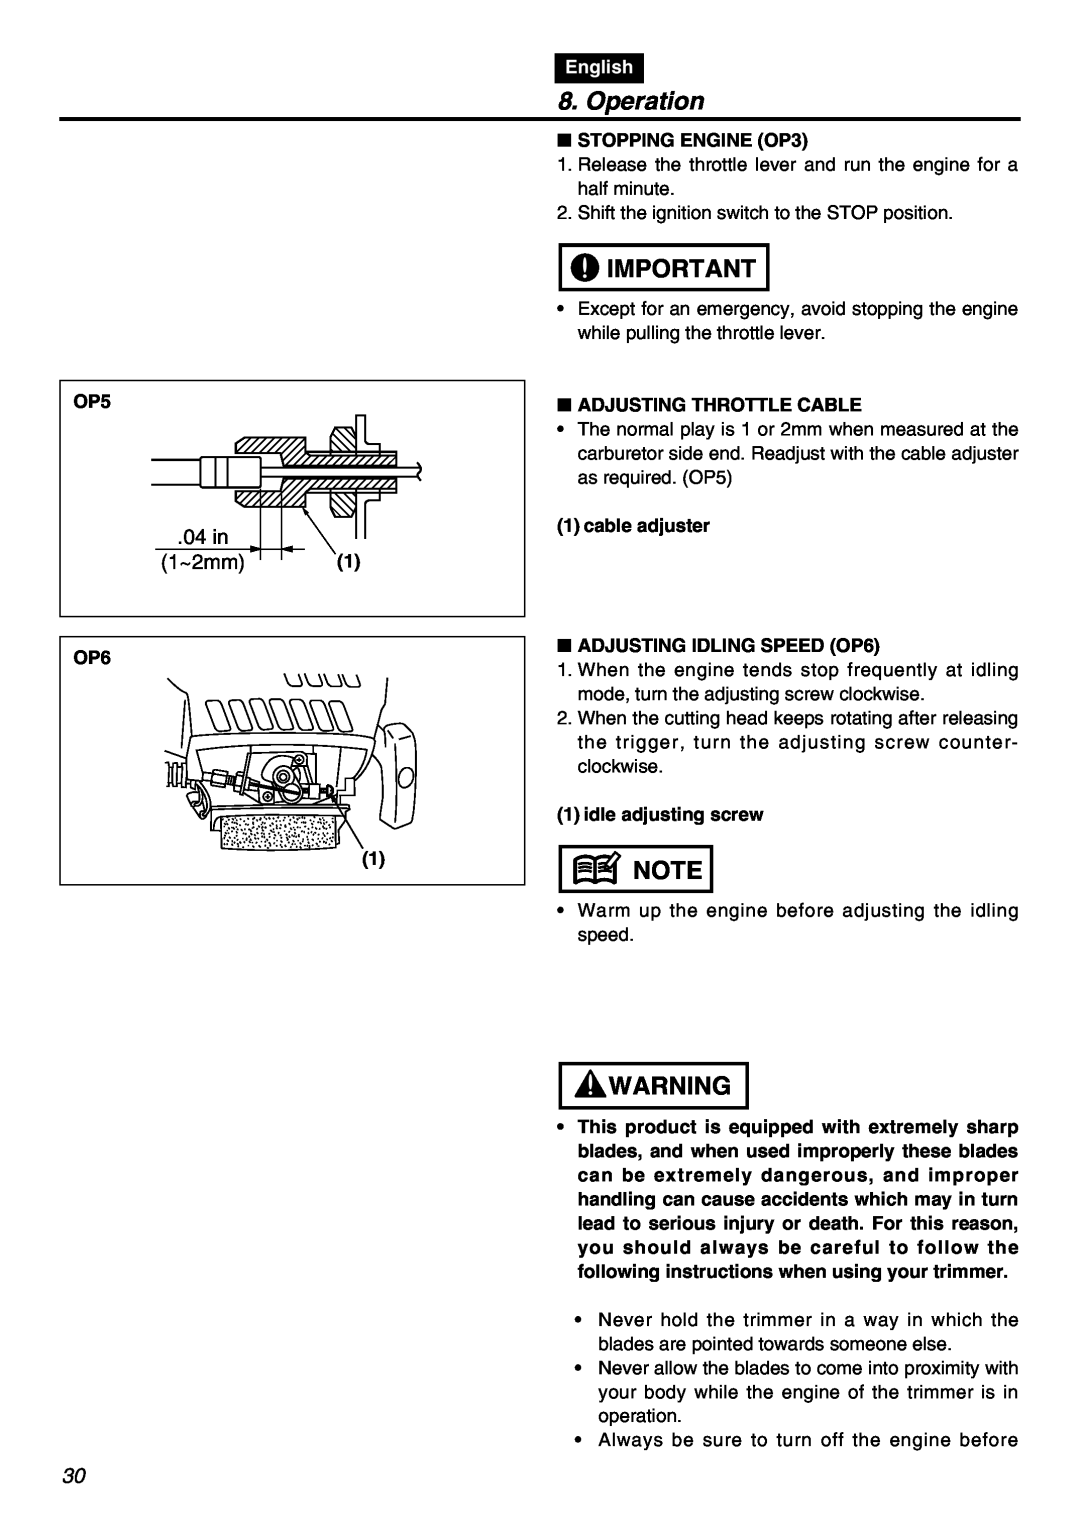 Univex SRTZ2401-CA manual Operation, 04 in 1~2mm, English 